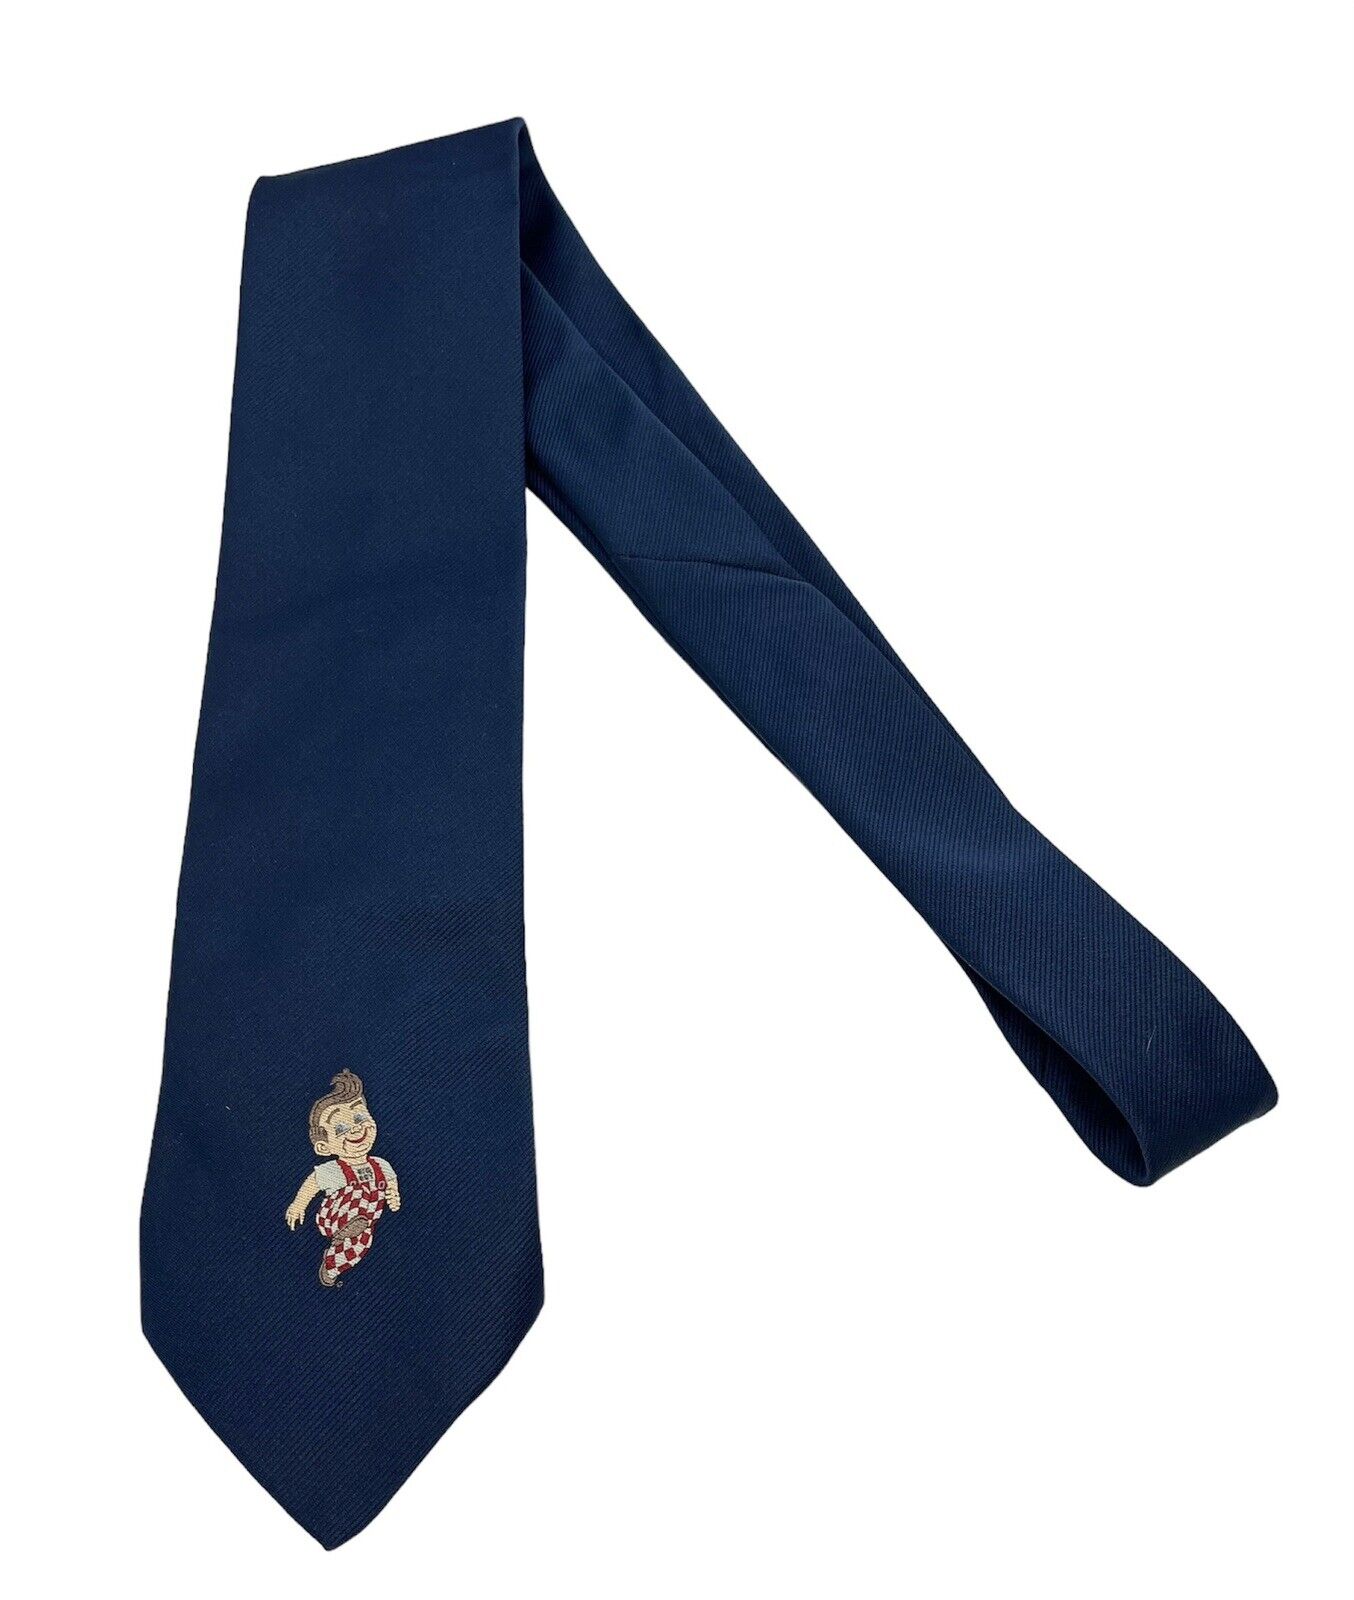 Vintage BIG BOY RESTAURANTS Men’s Tie Ralph Marlin 100% Polyester Navy Blue